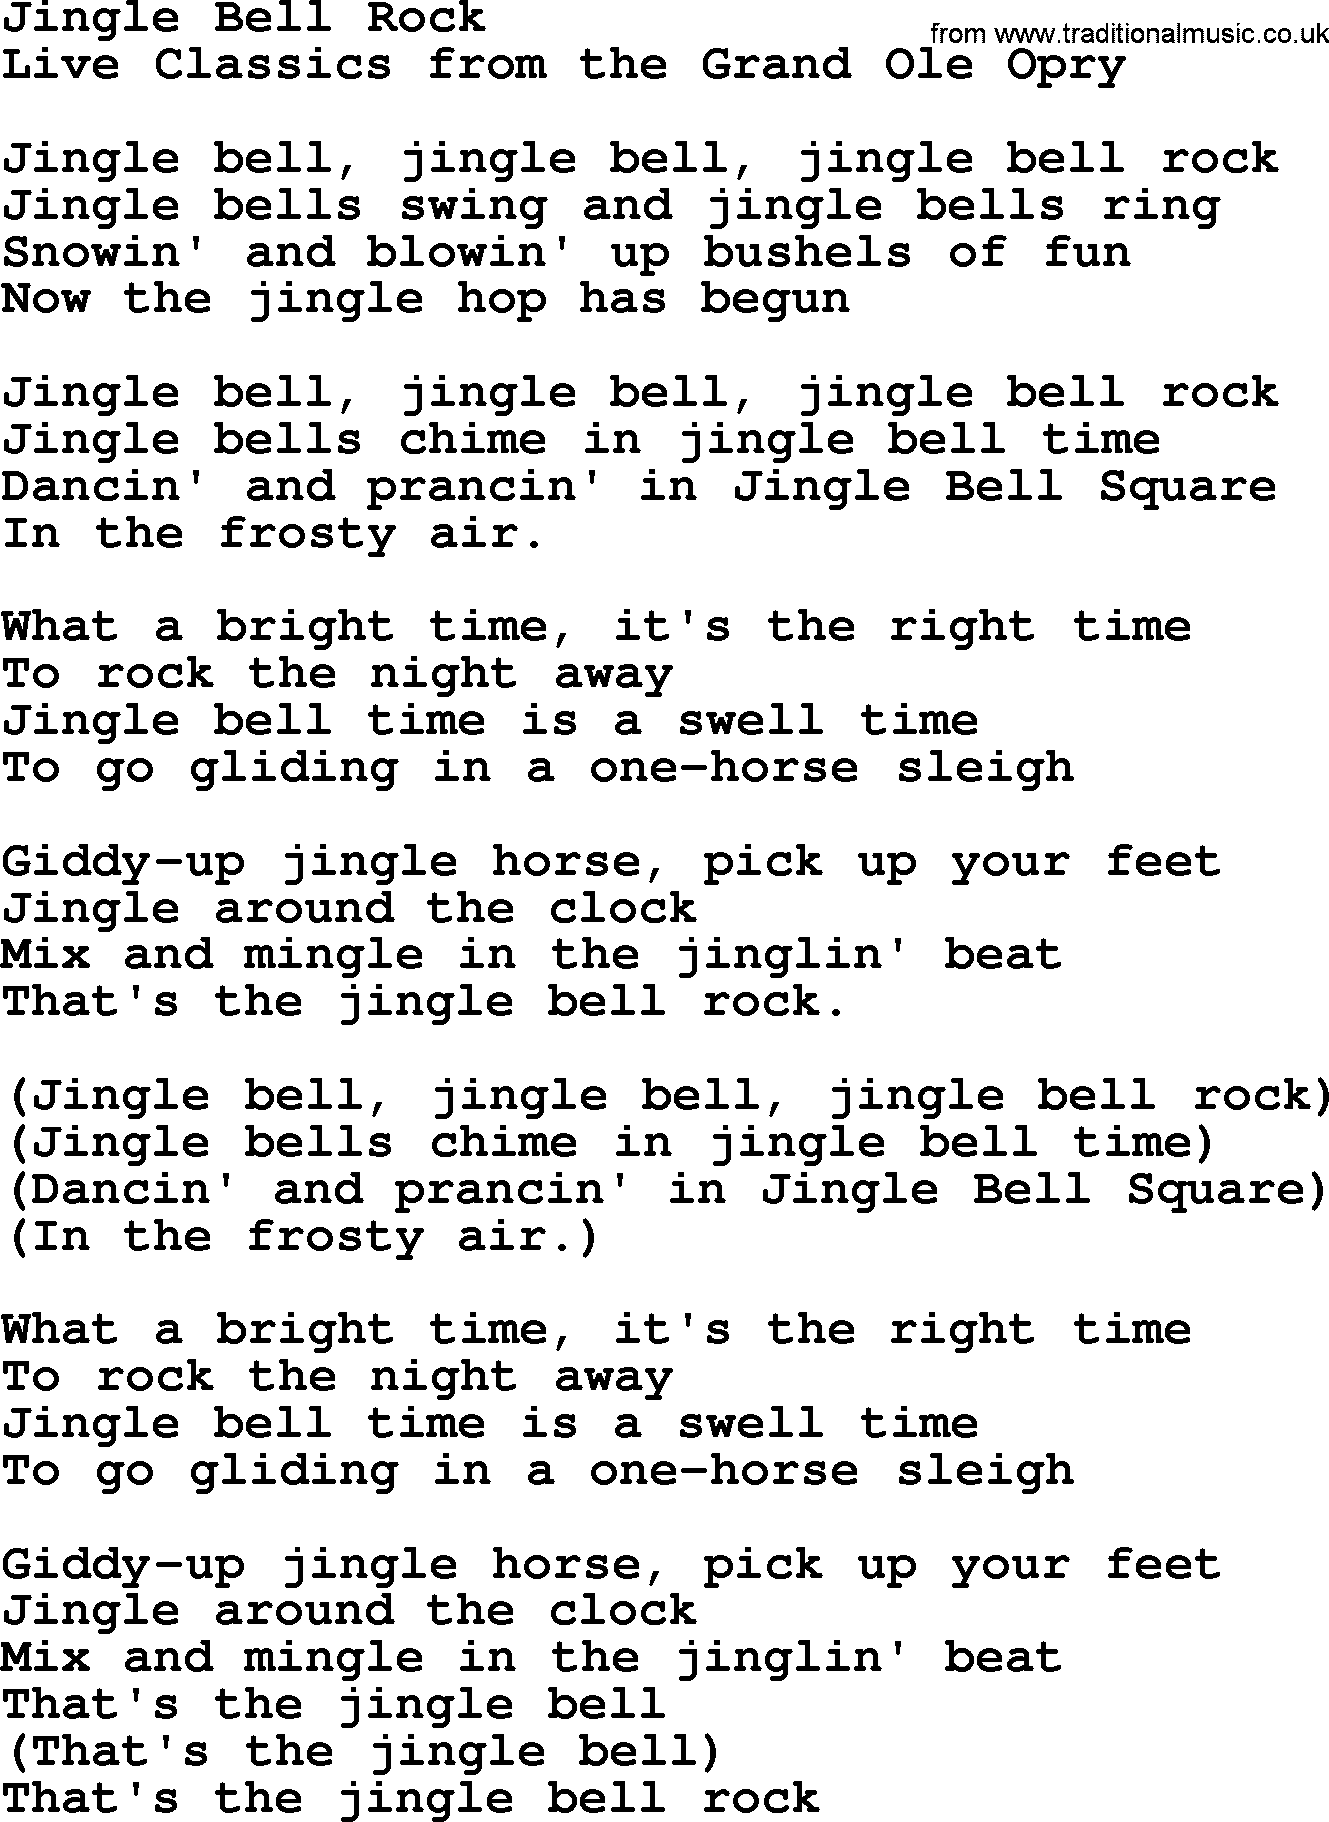 Jingle Bell Rock, by Marty Robbins lyrics